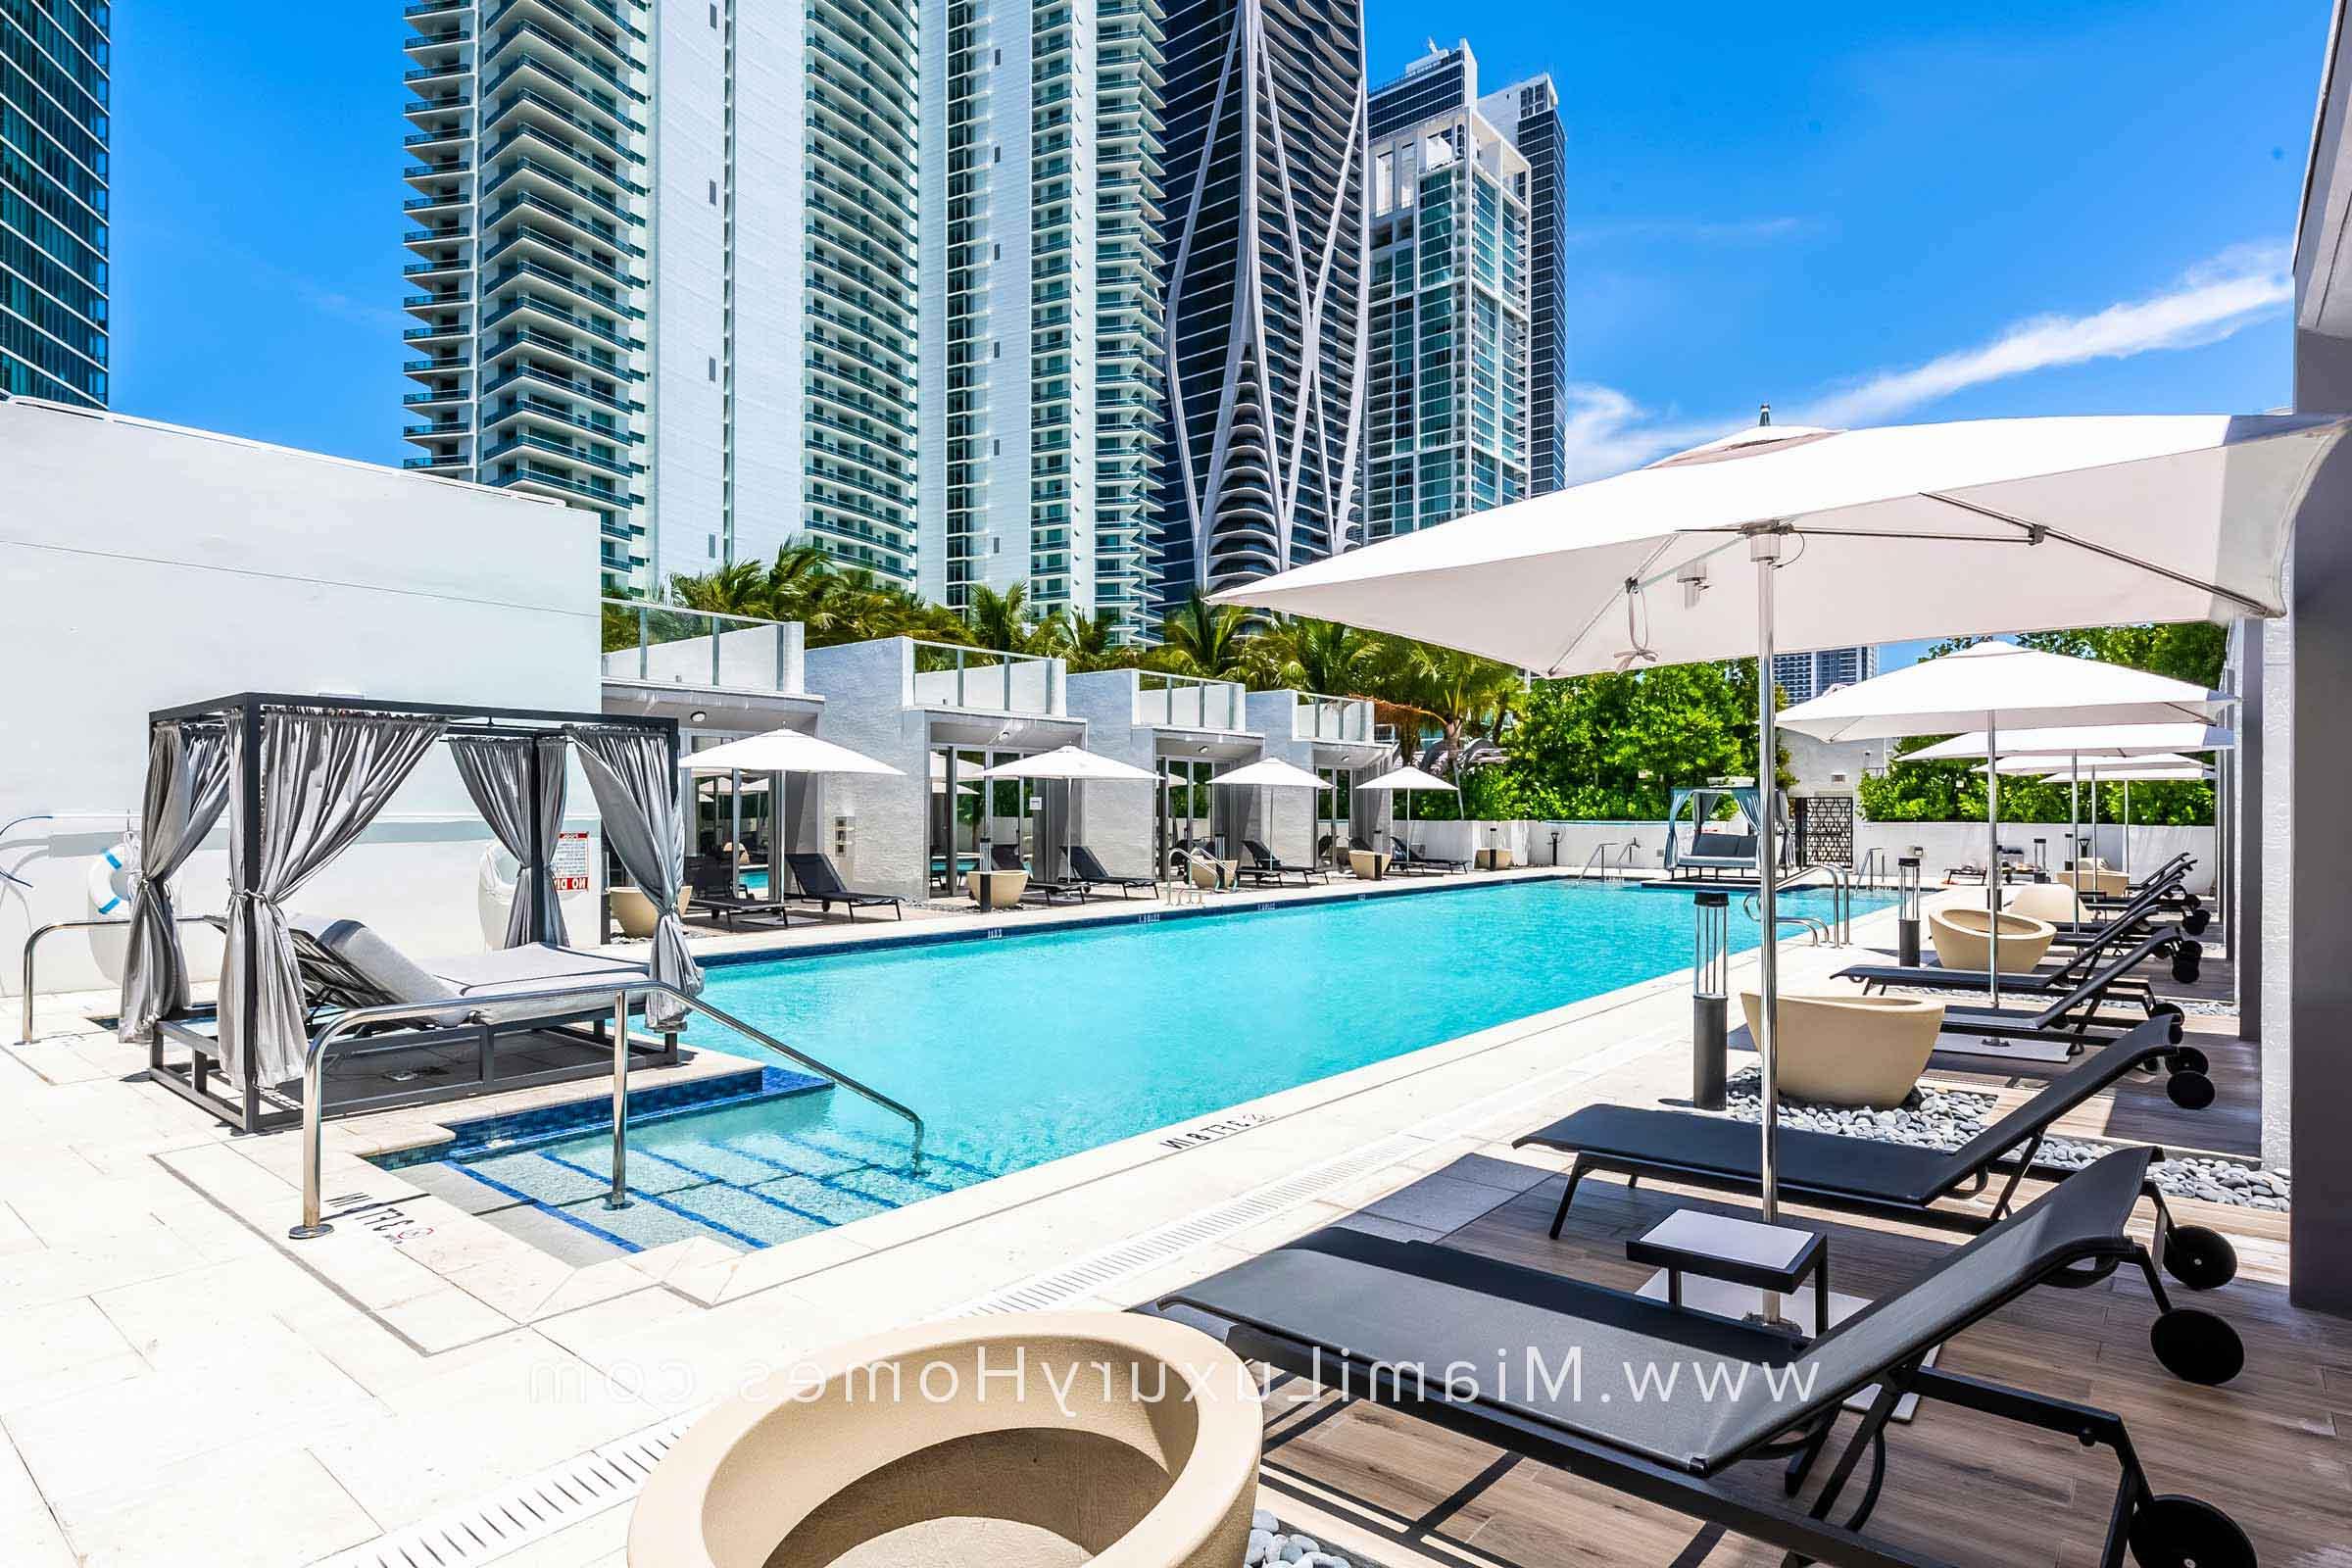 Paramount Miami Worldcenter Pool